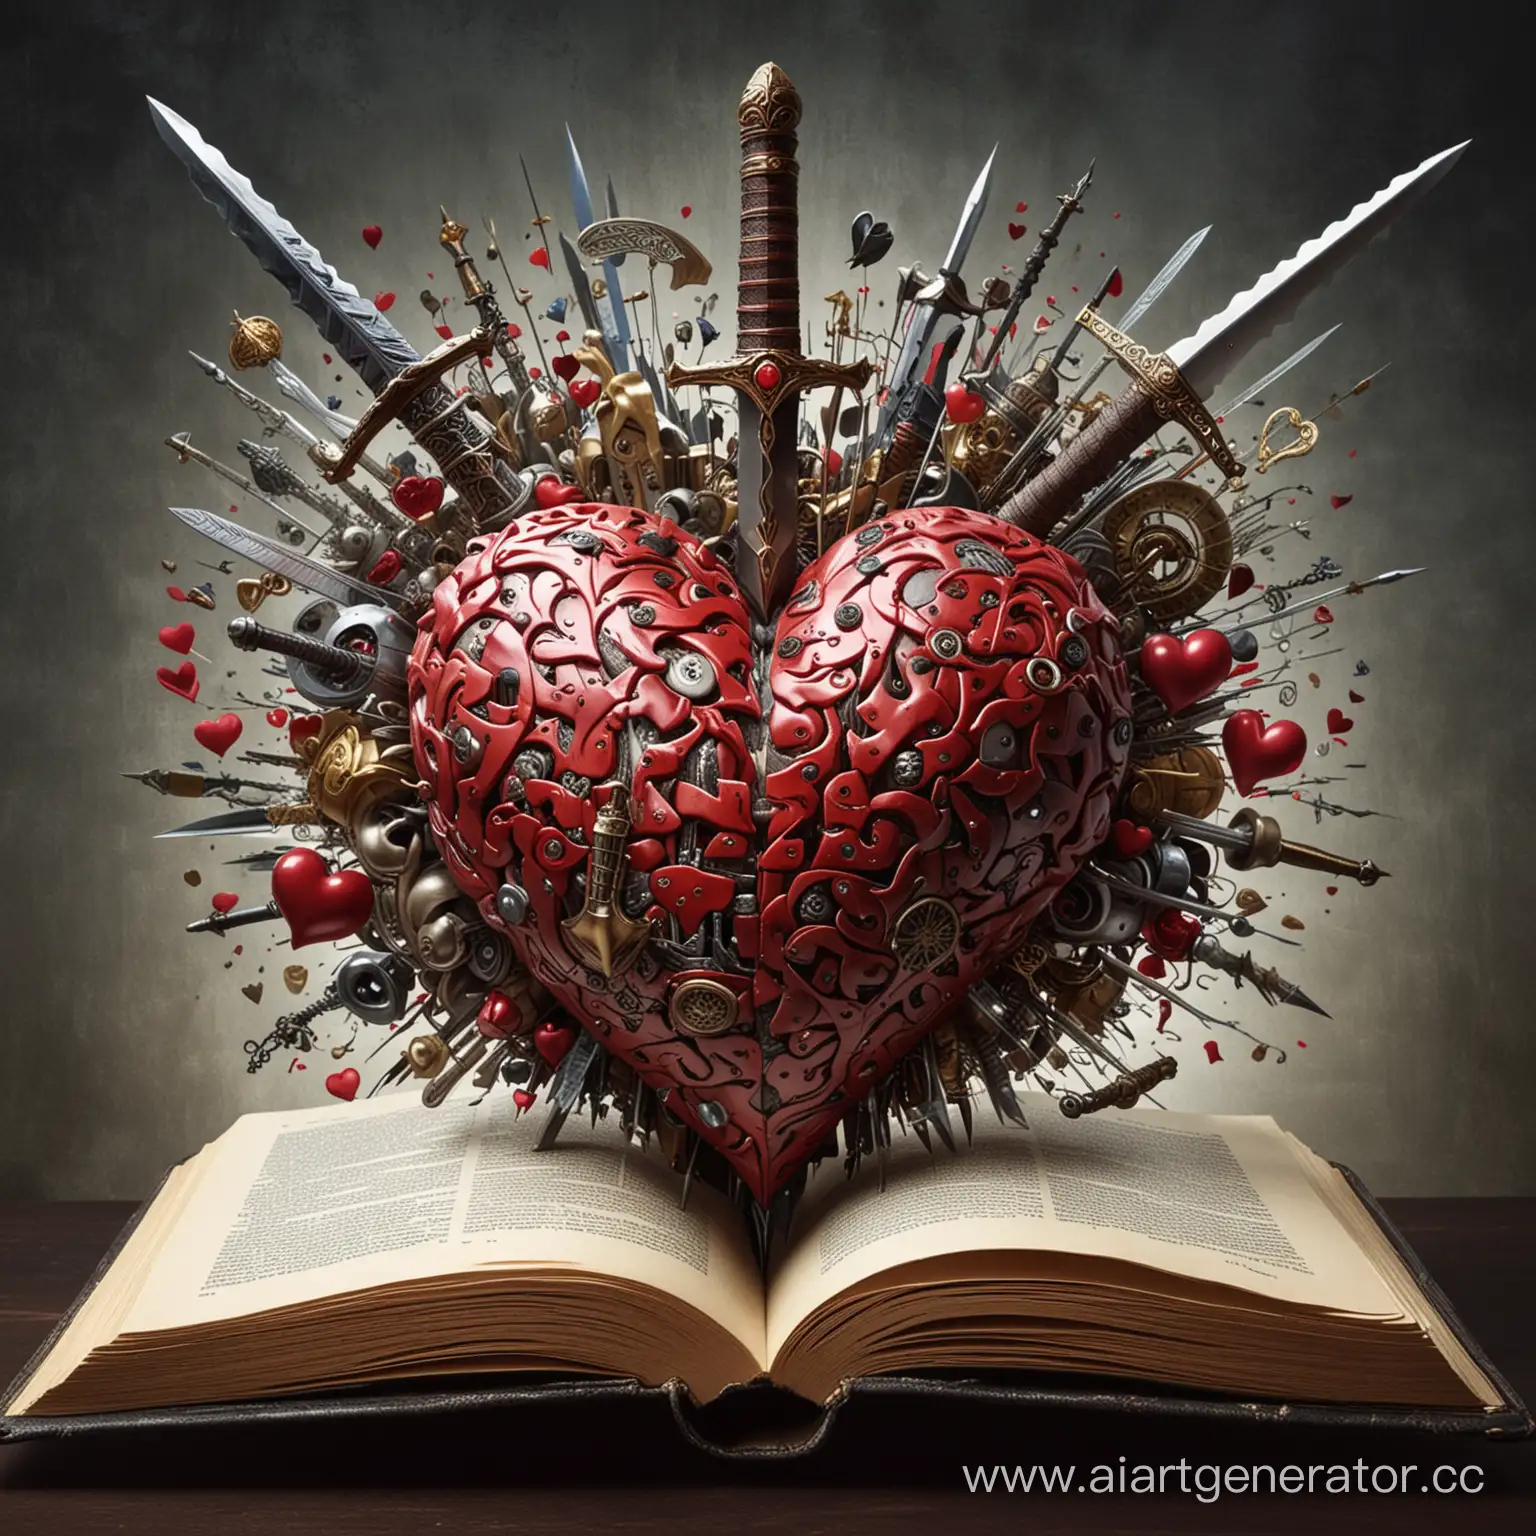 Из открытой книги вылетают "жанры" - сердечки, мечи, мозг, и так далее. Жанры книги